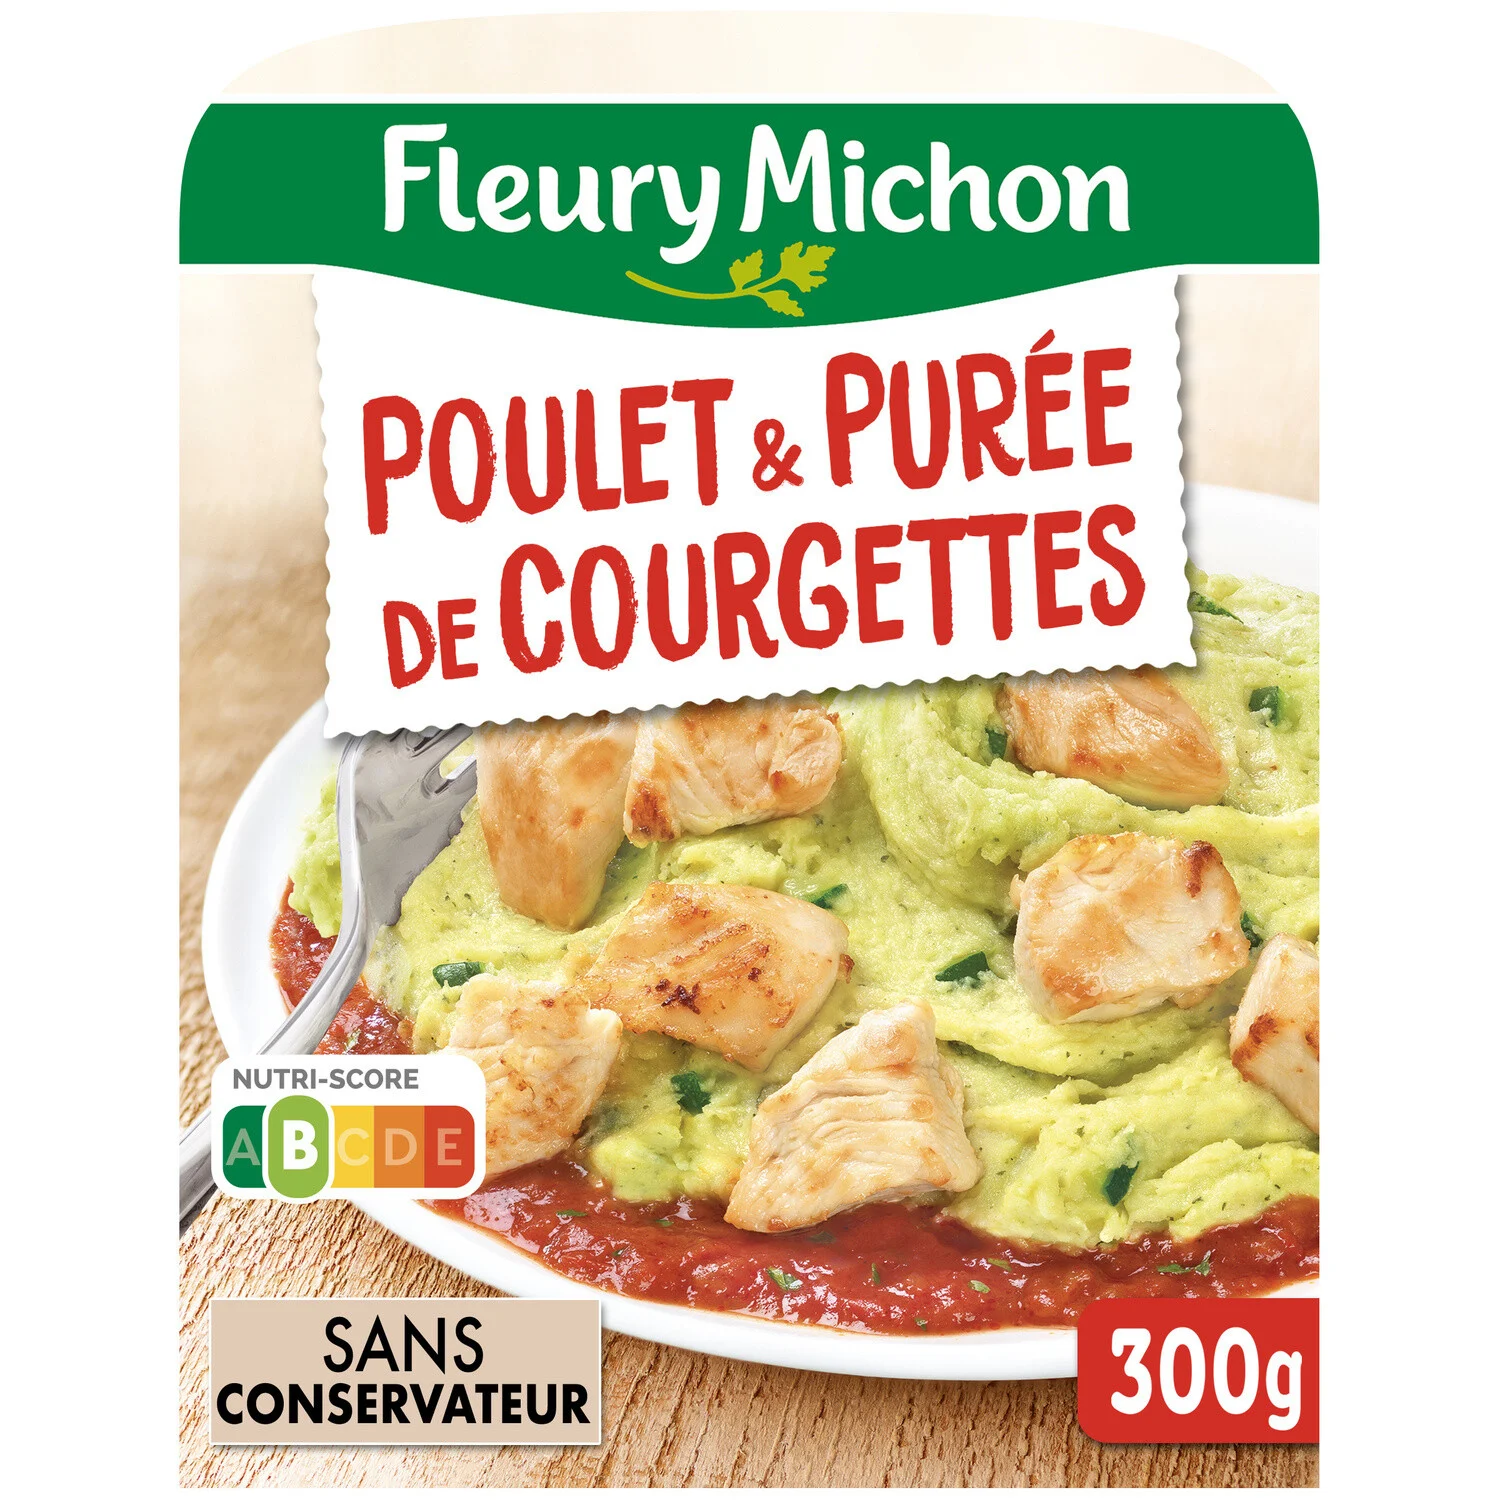 Fleury Michon Chicken & courgettes puree 300g